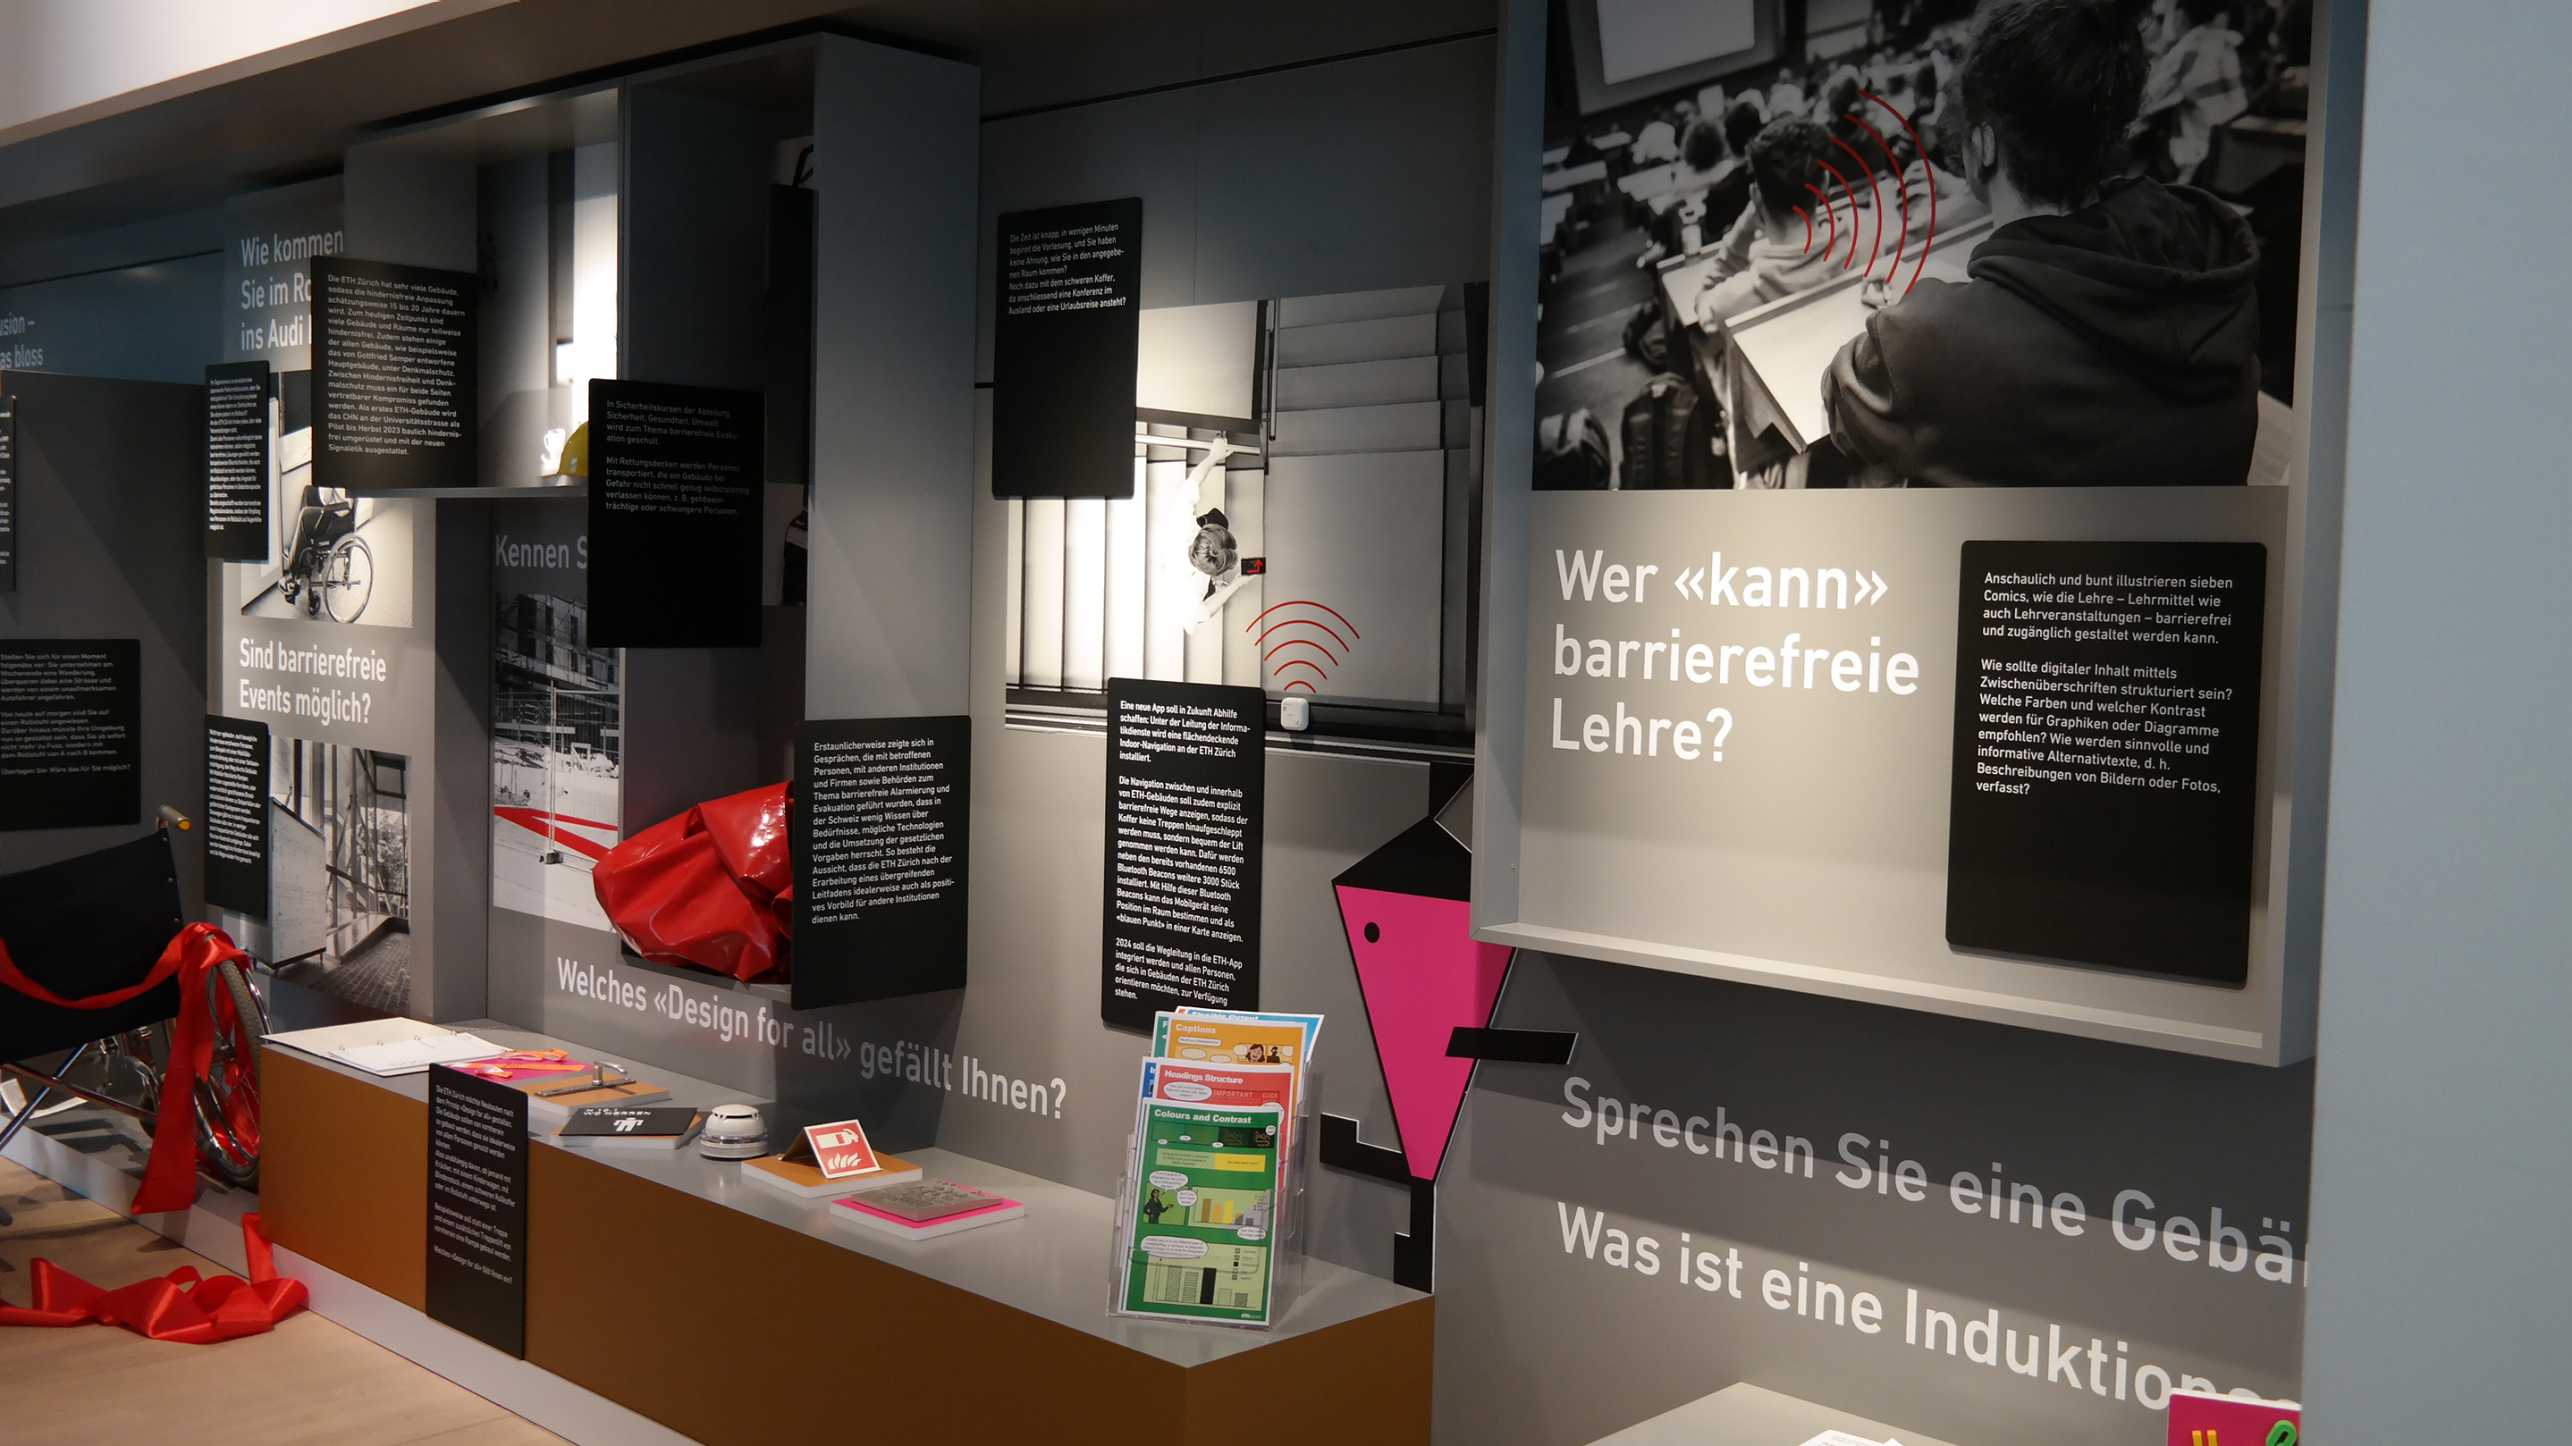 Enlarged view: Exhibition "Barrier-free at ETH Zurich"